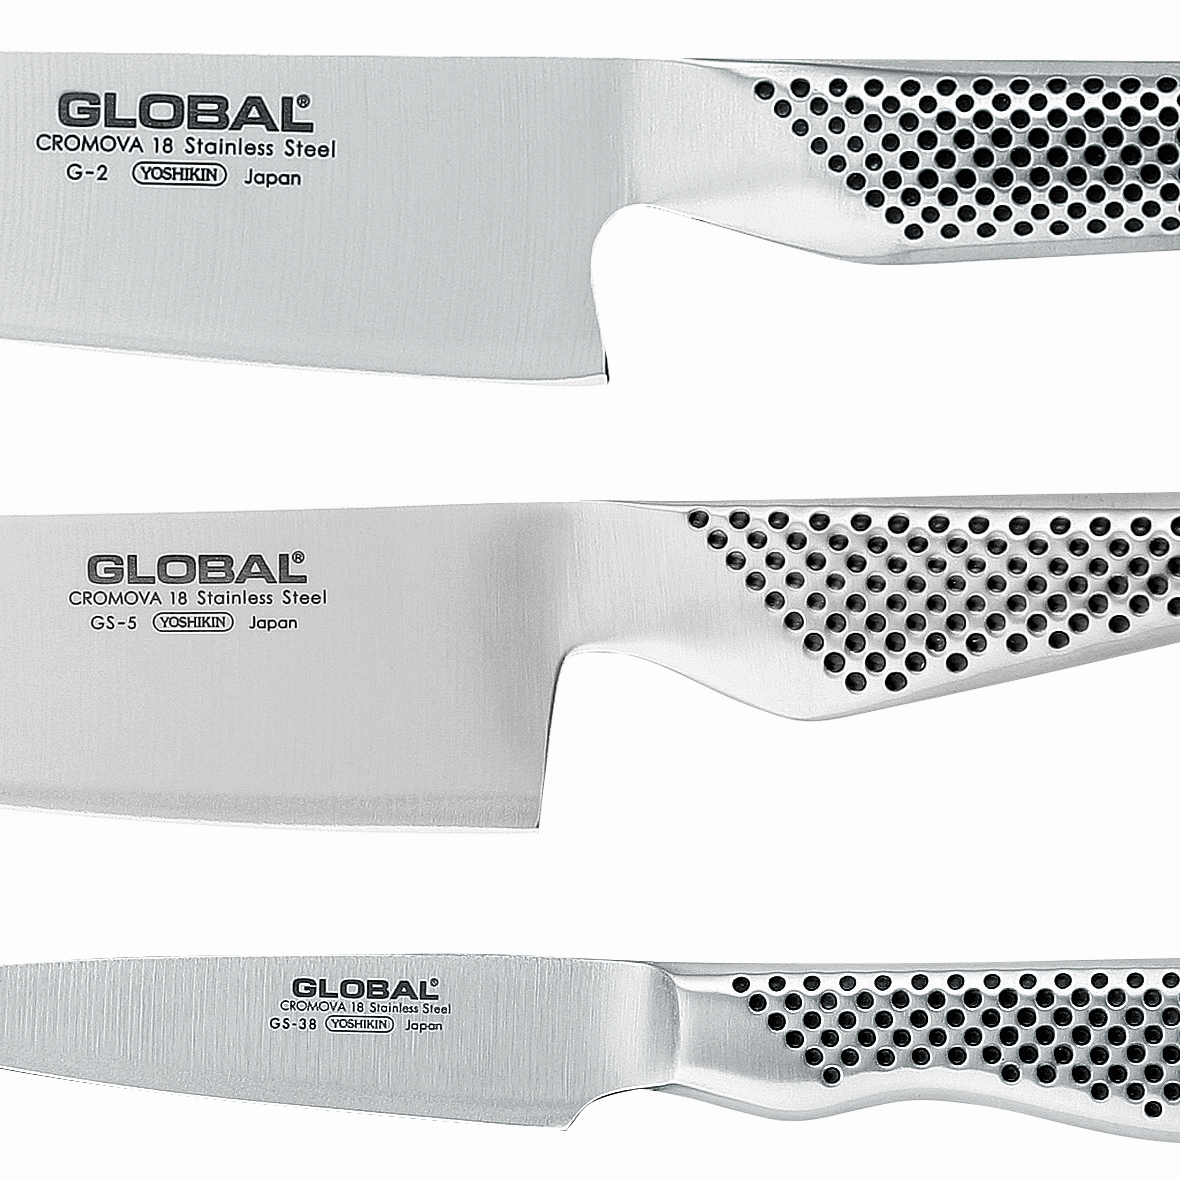 Global 3 Piece Knife Set - Cook